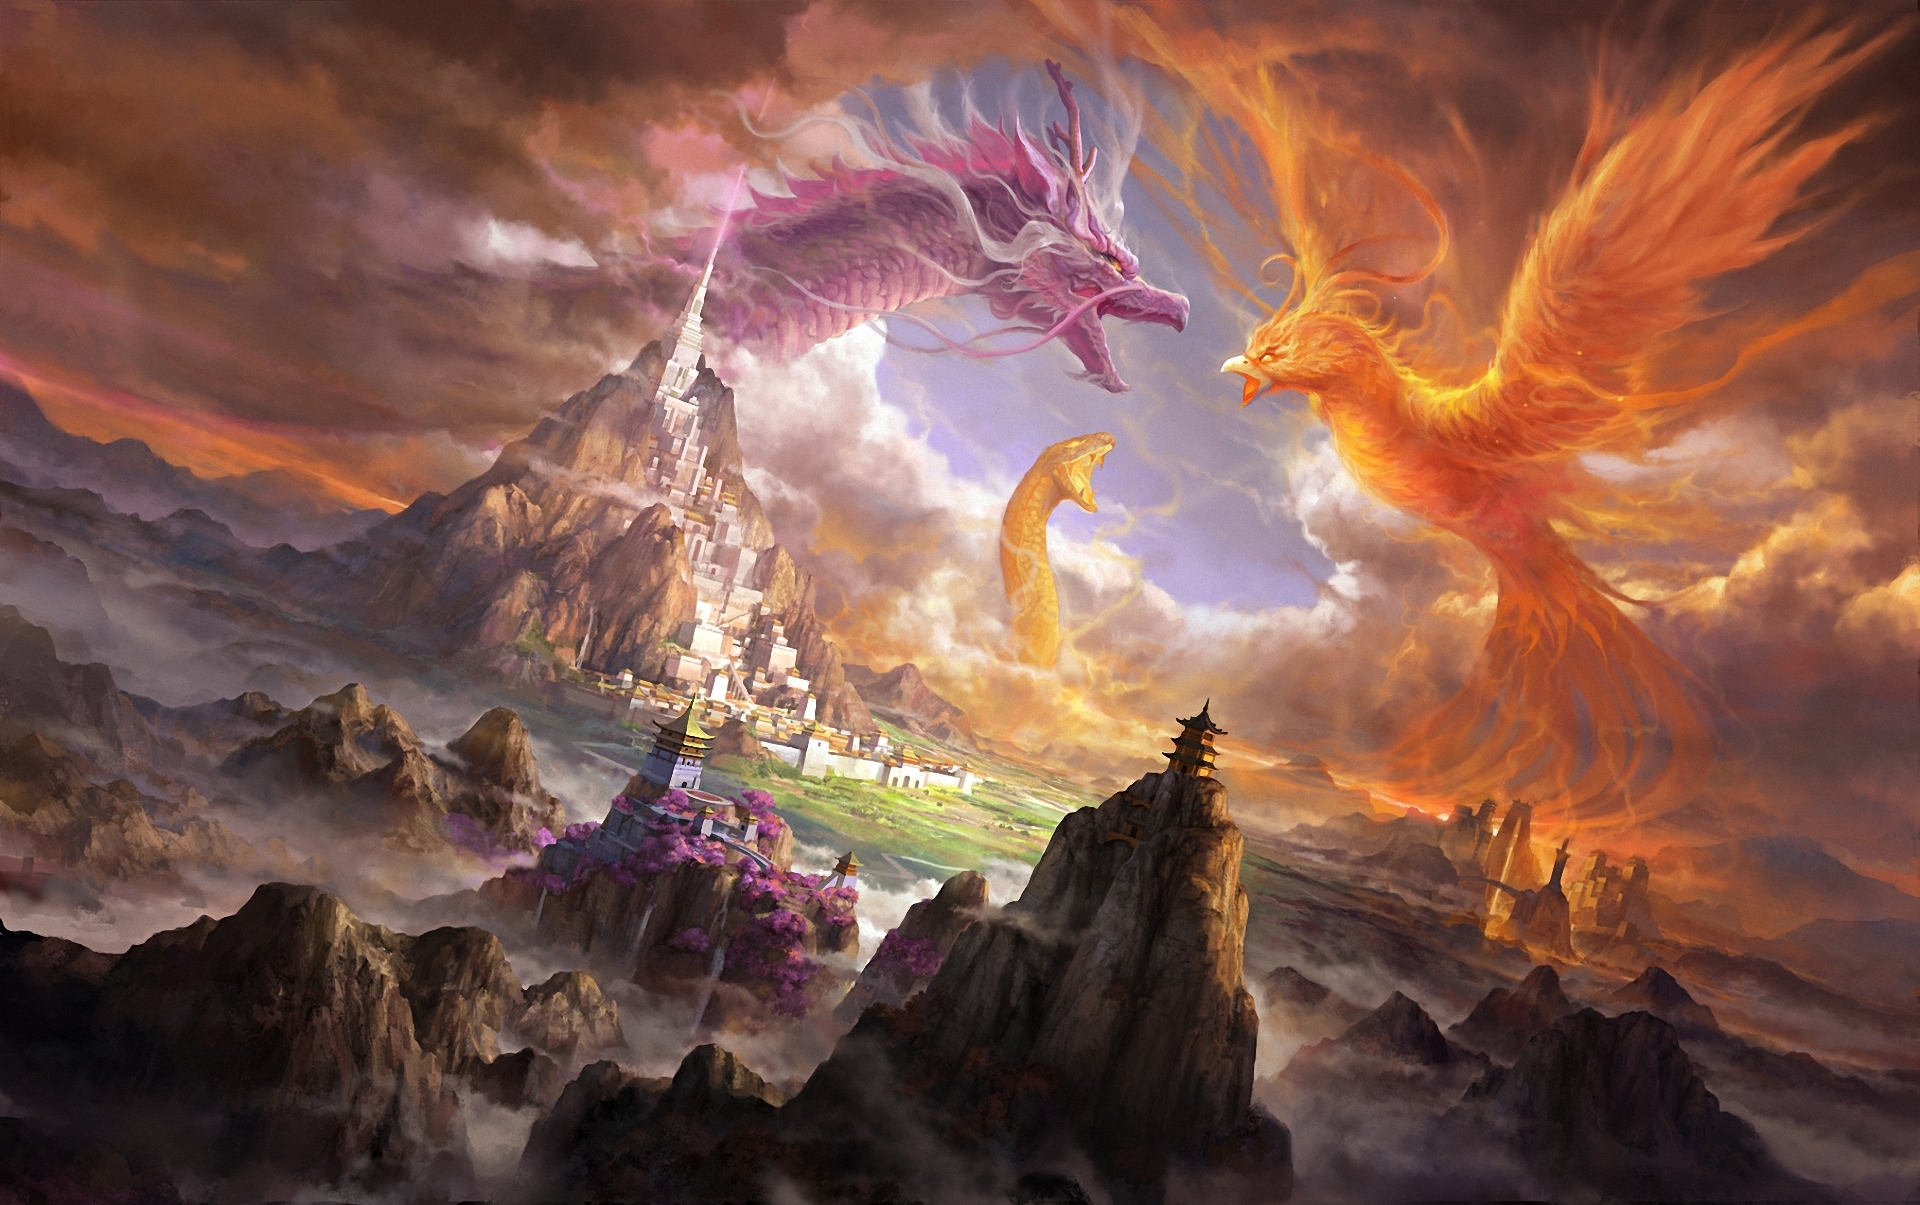 Giant dragon, phoenix and snake battling by molybdenumgp03 HD Wallpaper